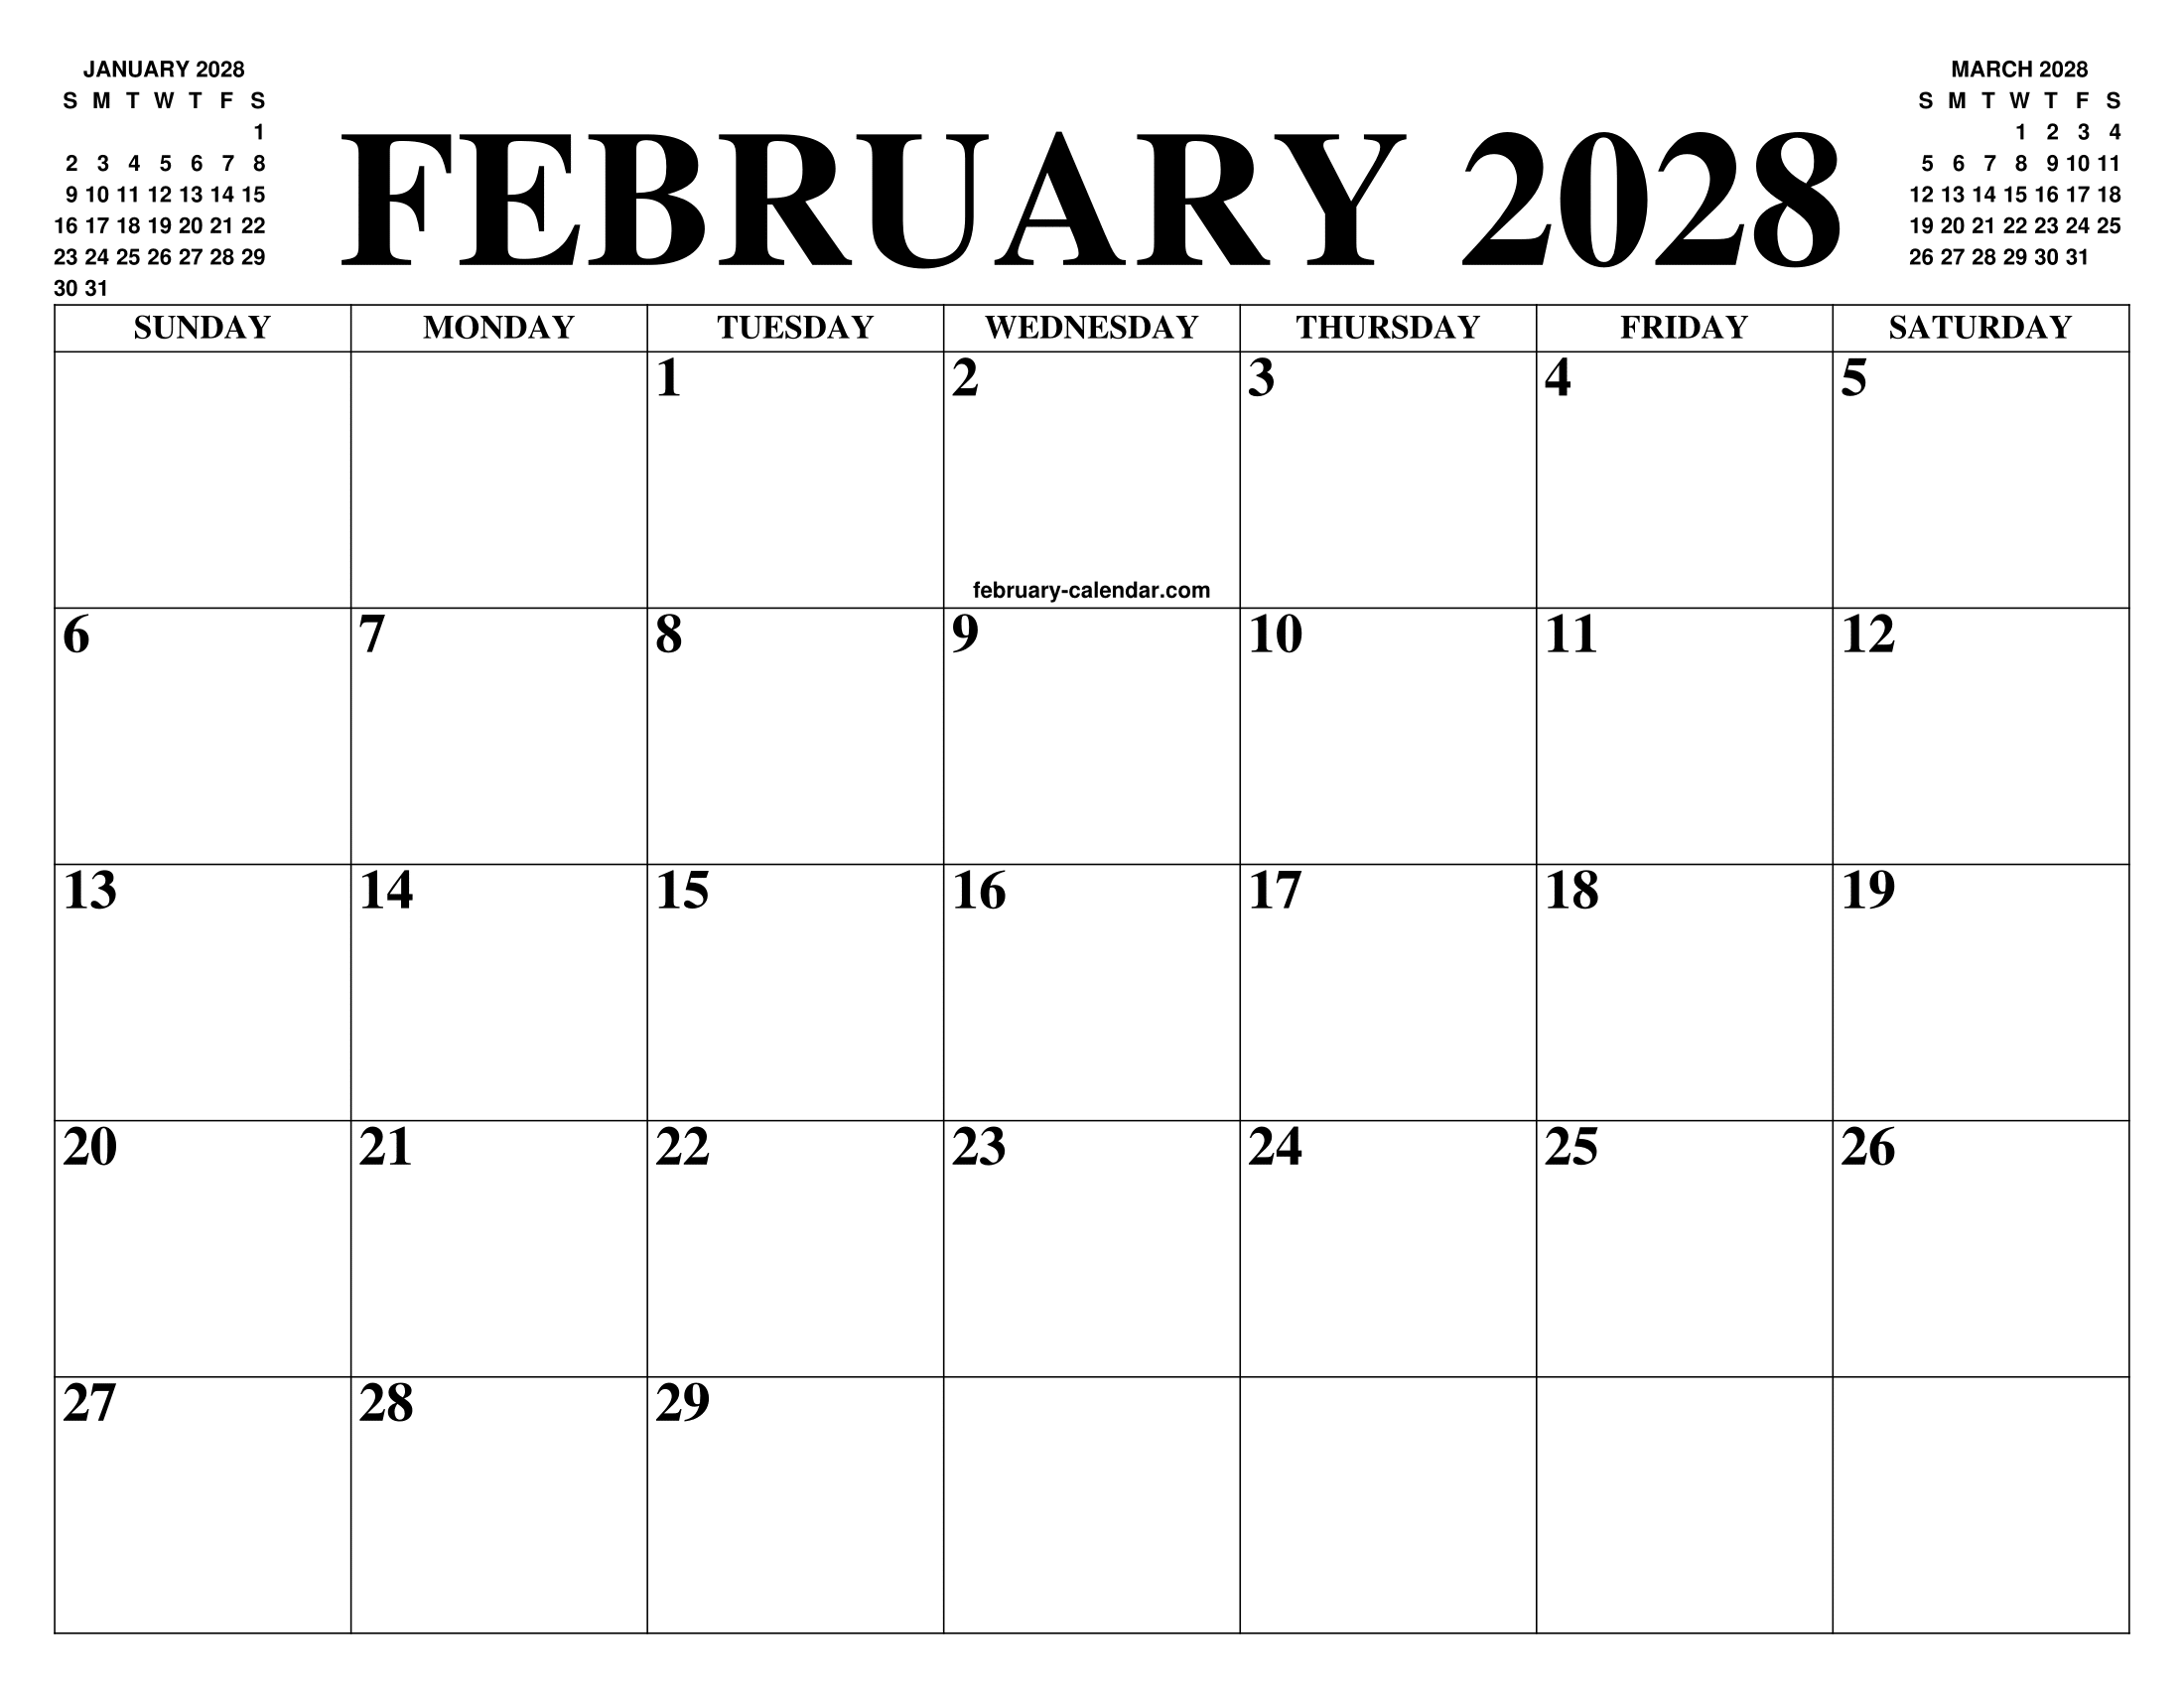 FEBRUARY 2028 CALENDAR OF THE MONTH: FREE PRINTABLE FEBRUARY CALENDAR